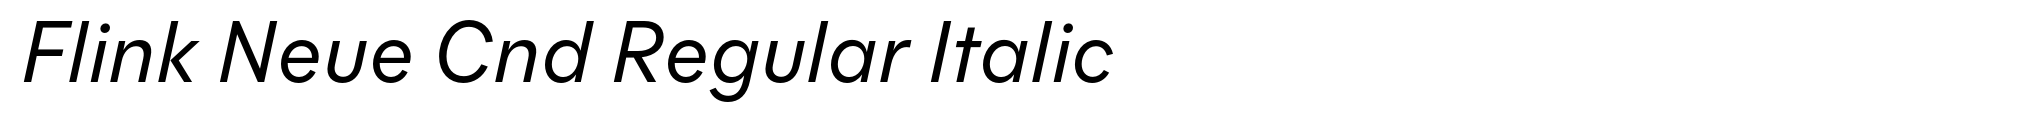 Flink Neue Cnd Regular Italic image